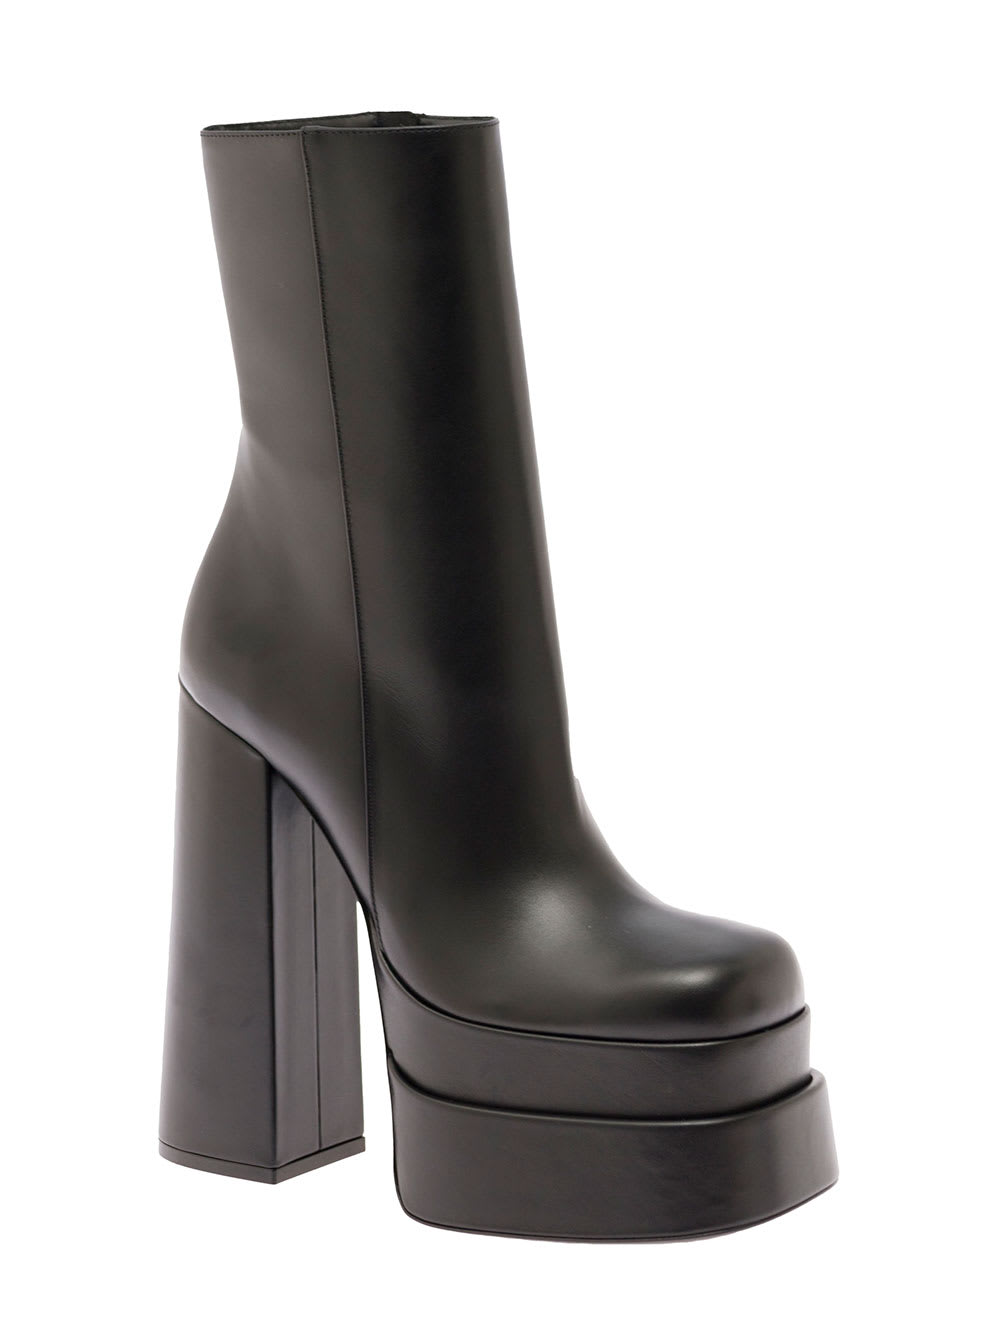 Versace Black Booties In Leather With Platform And High Block Heel Versace Woman